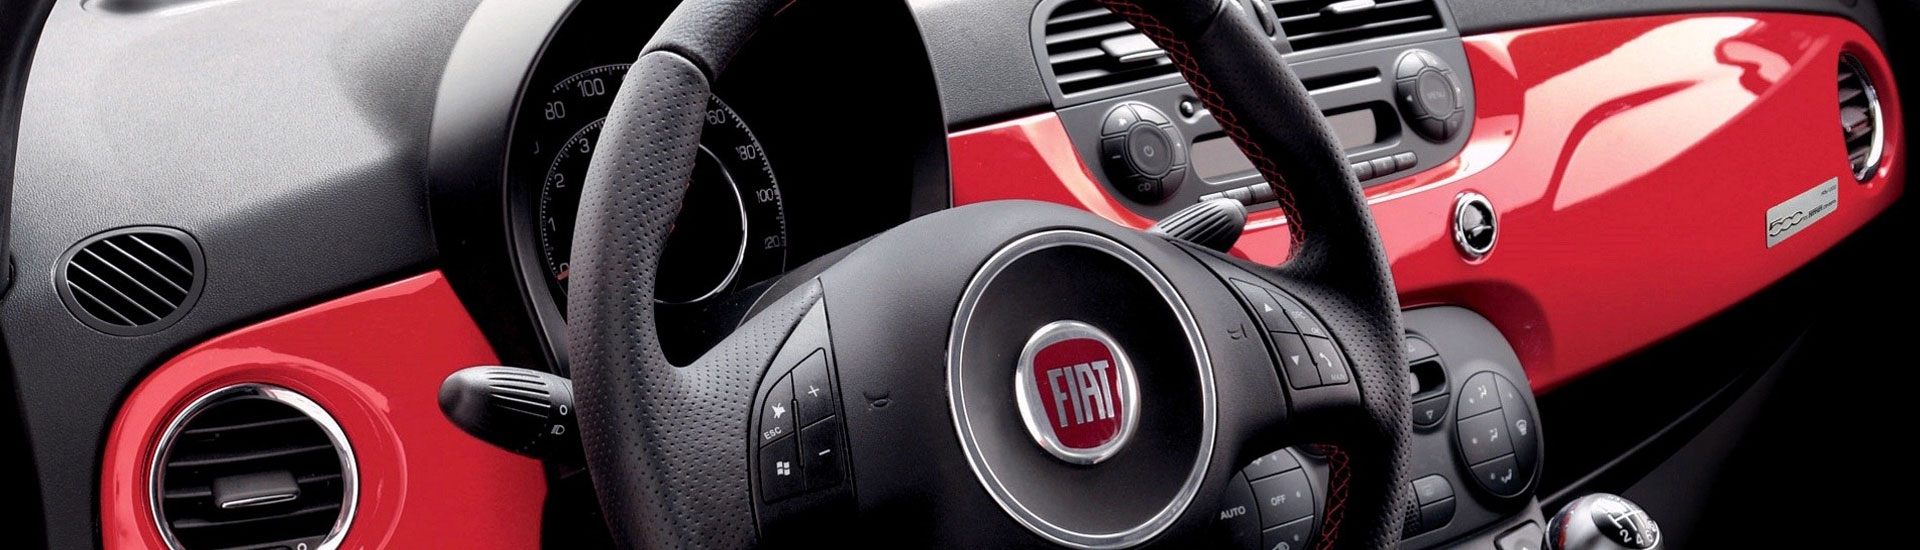 2012 Fiat 500 Custom Dash Kits